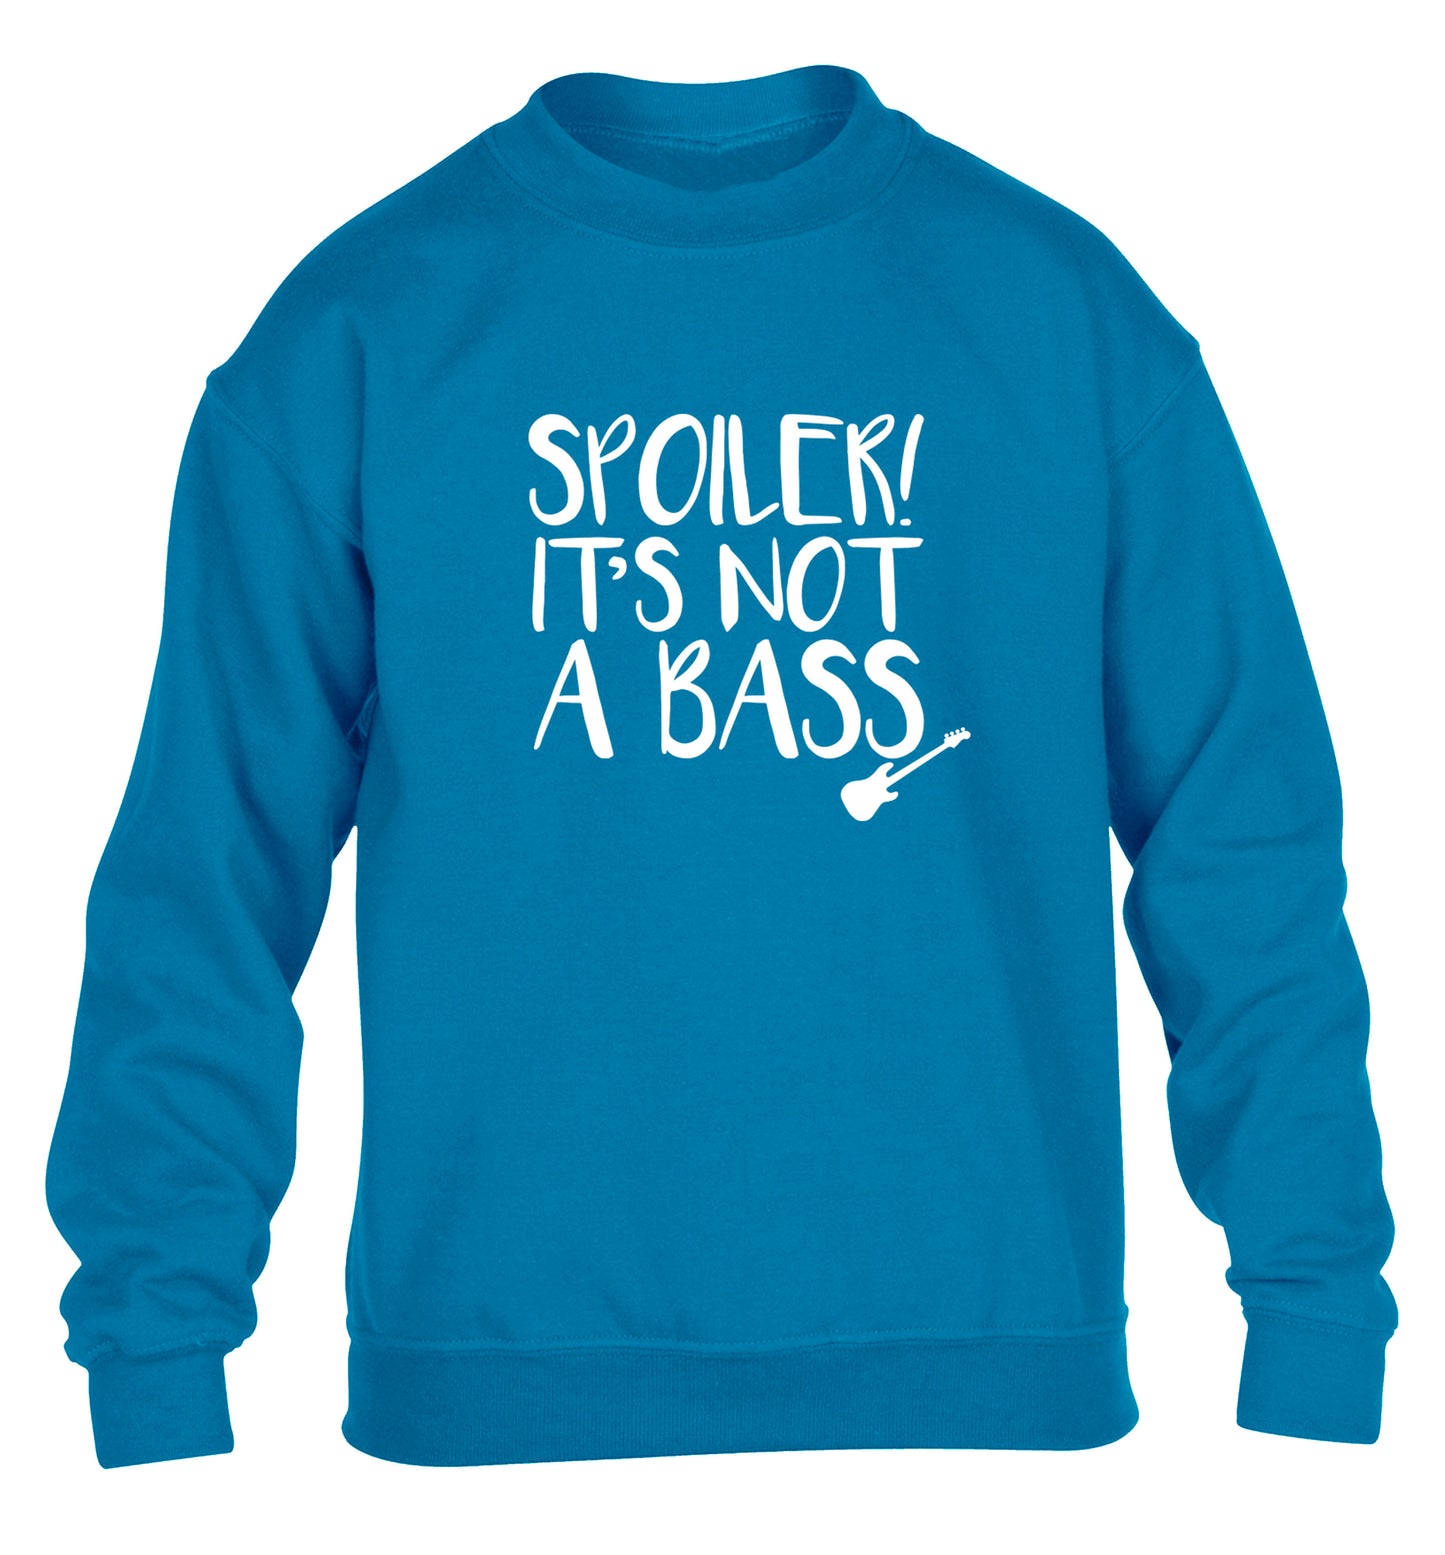 Spoiler it's not a bass children's blue sweater 12-13 Years